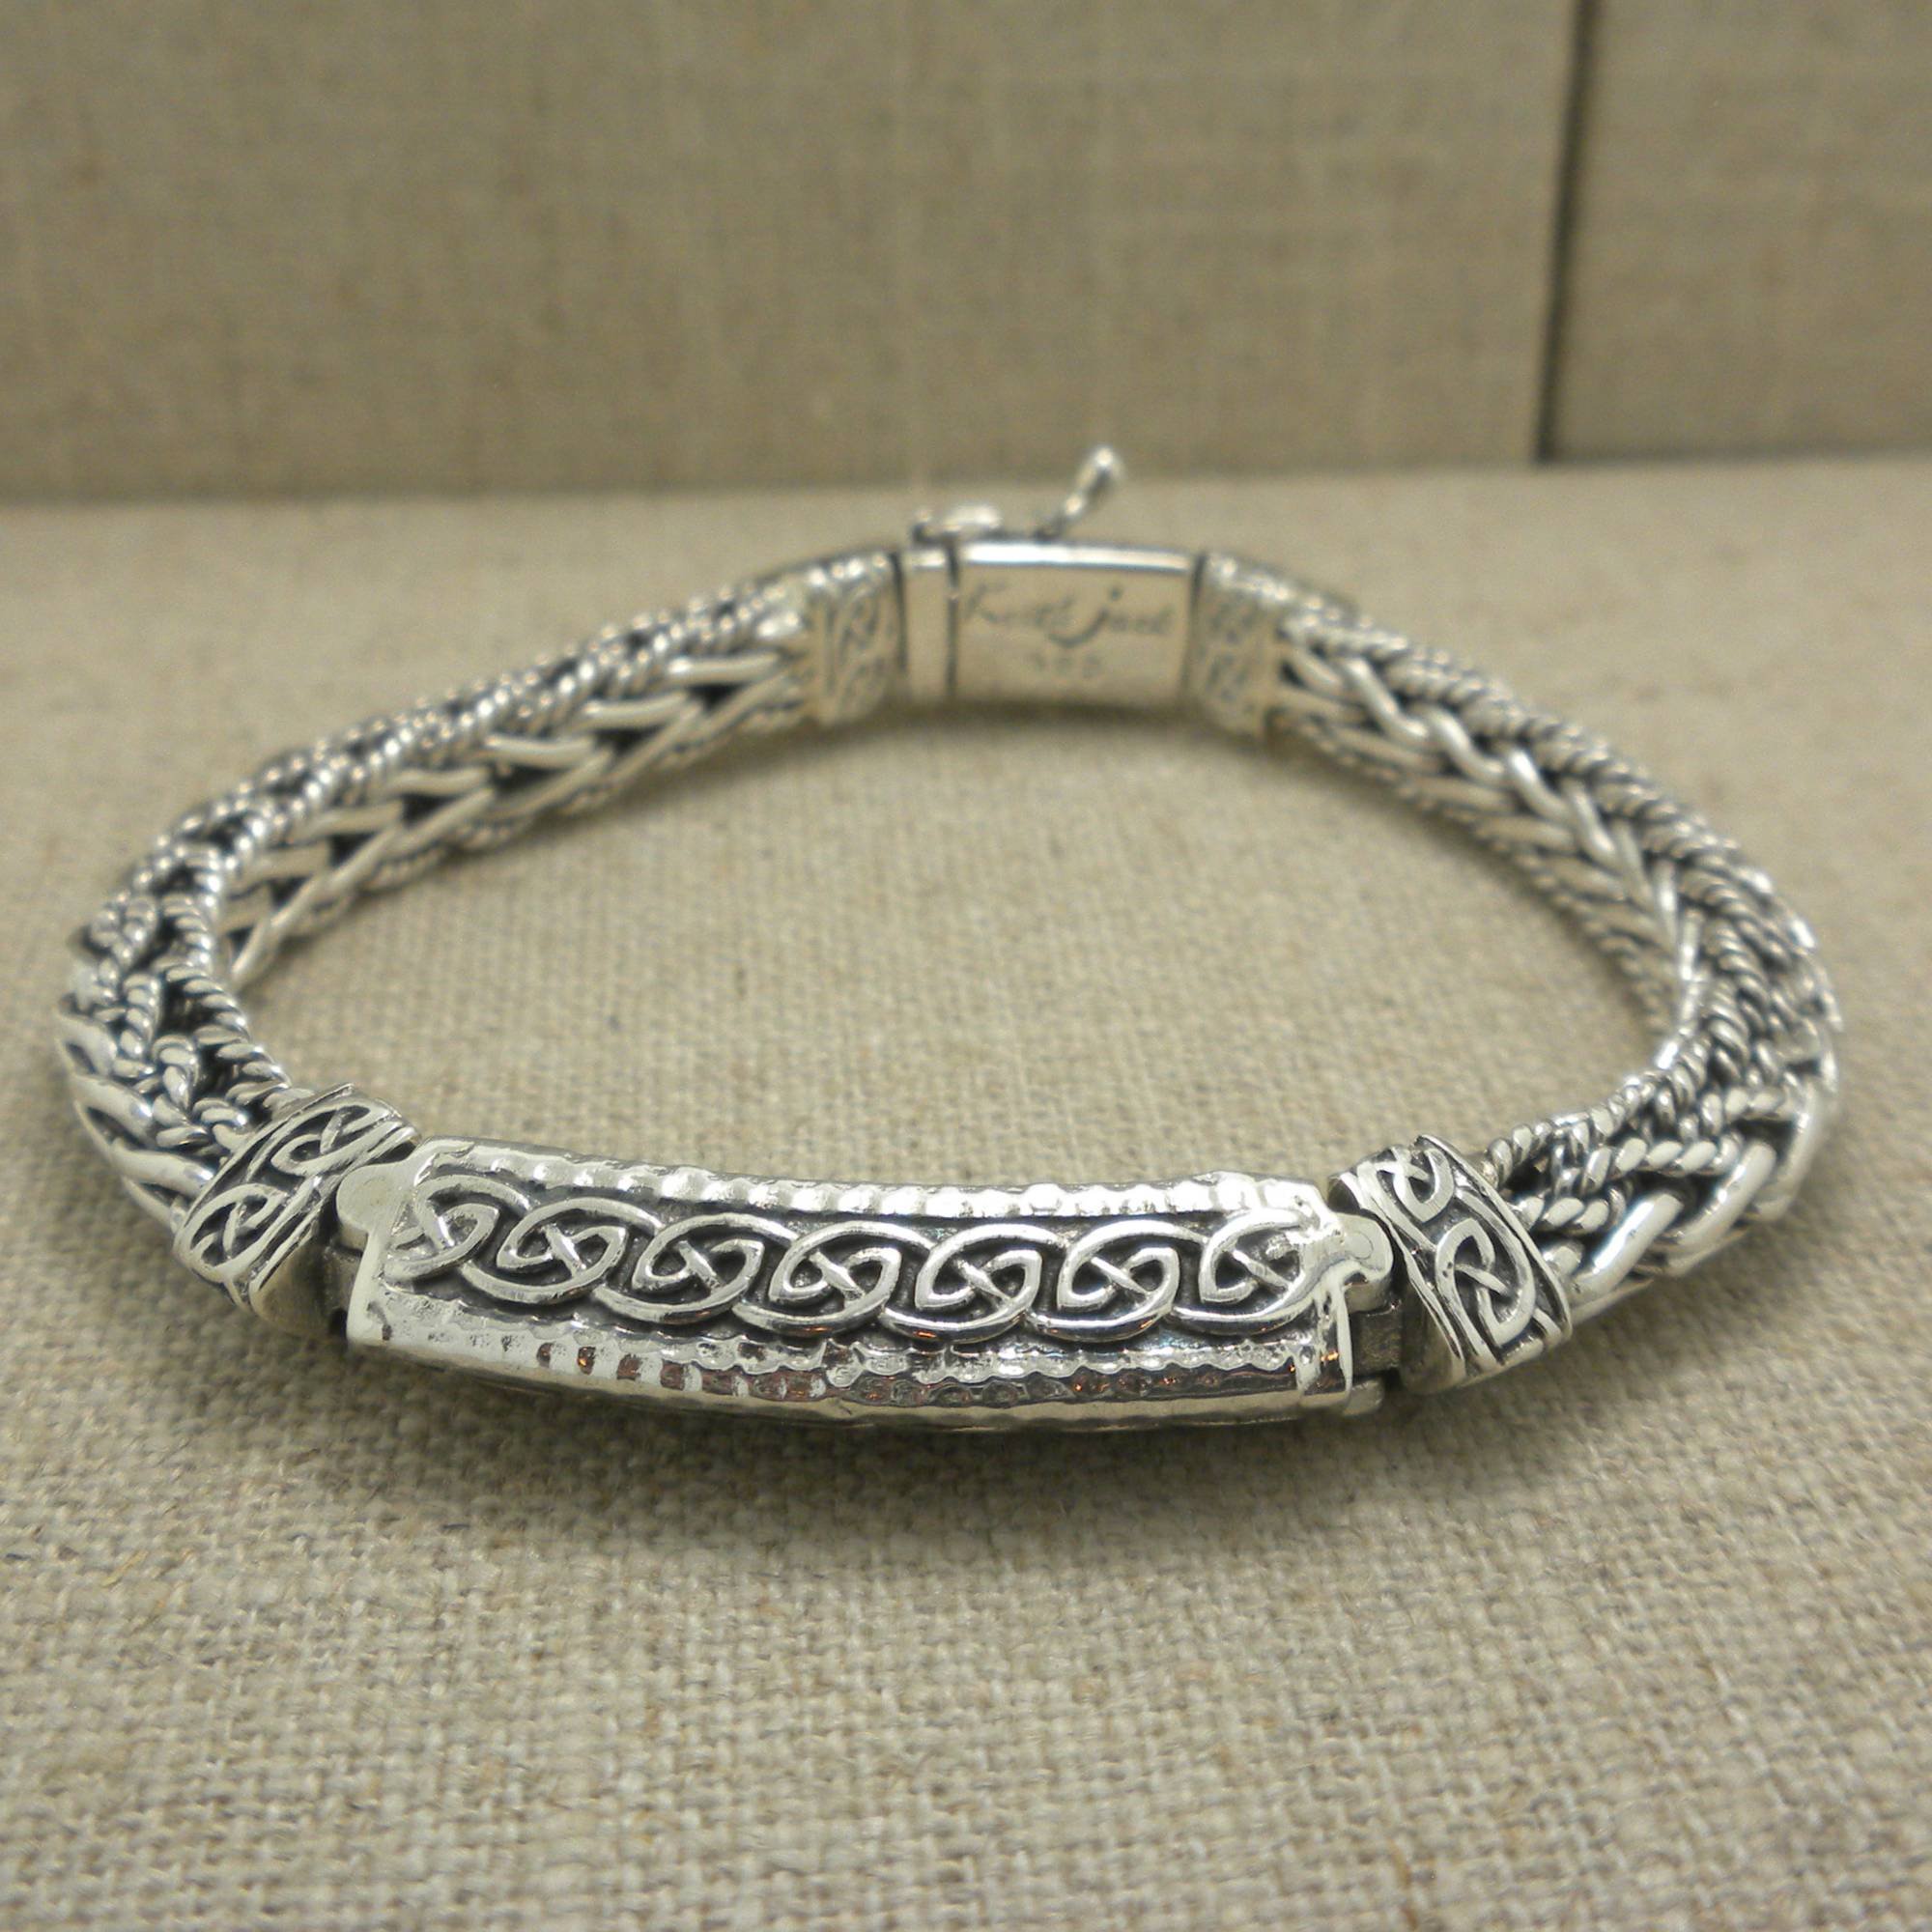 09PBS0101-triangular-bar-dragon-weave-bracelet.jpg